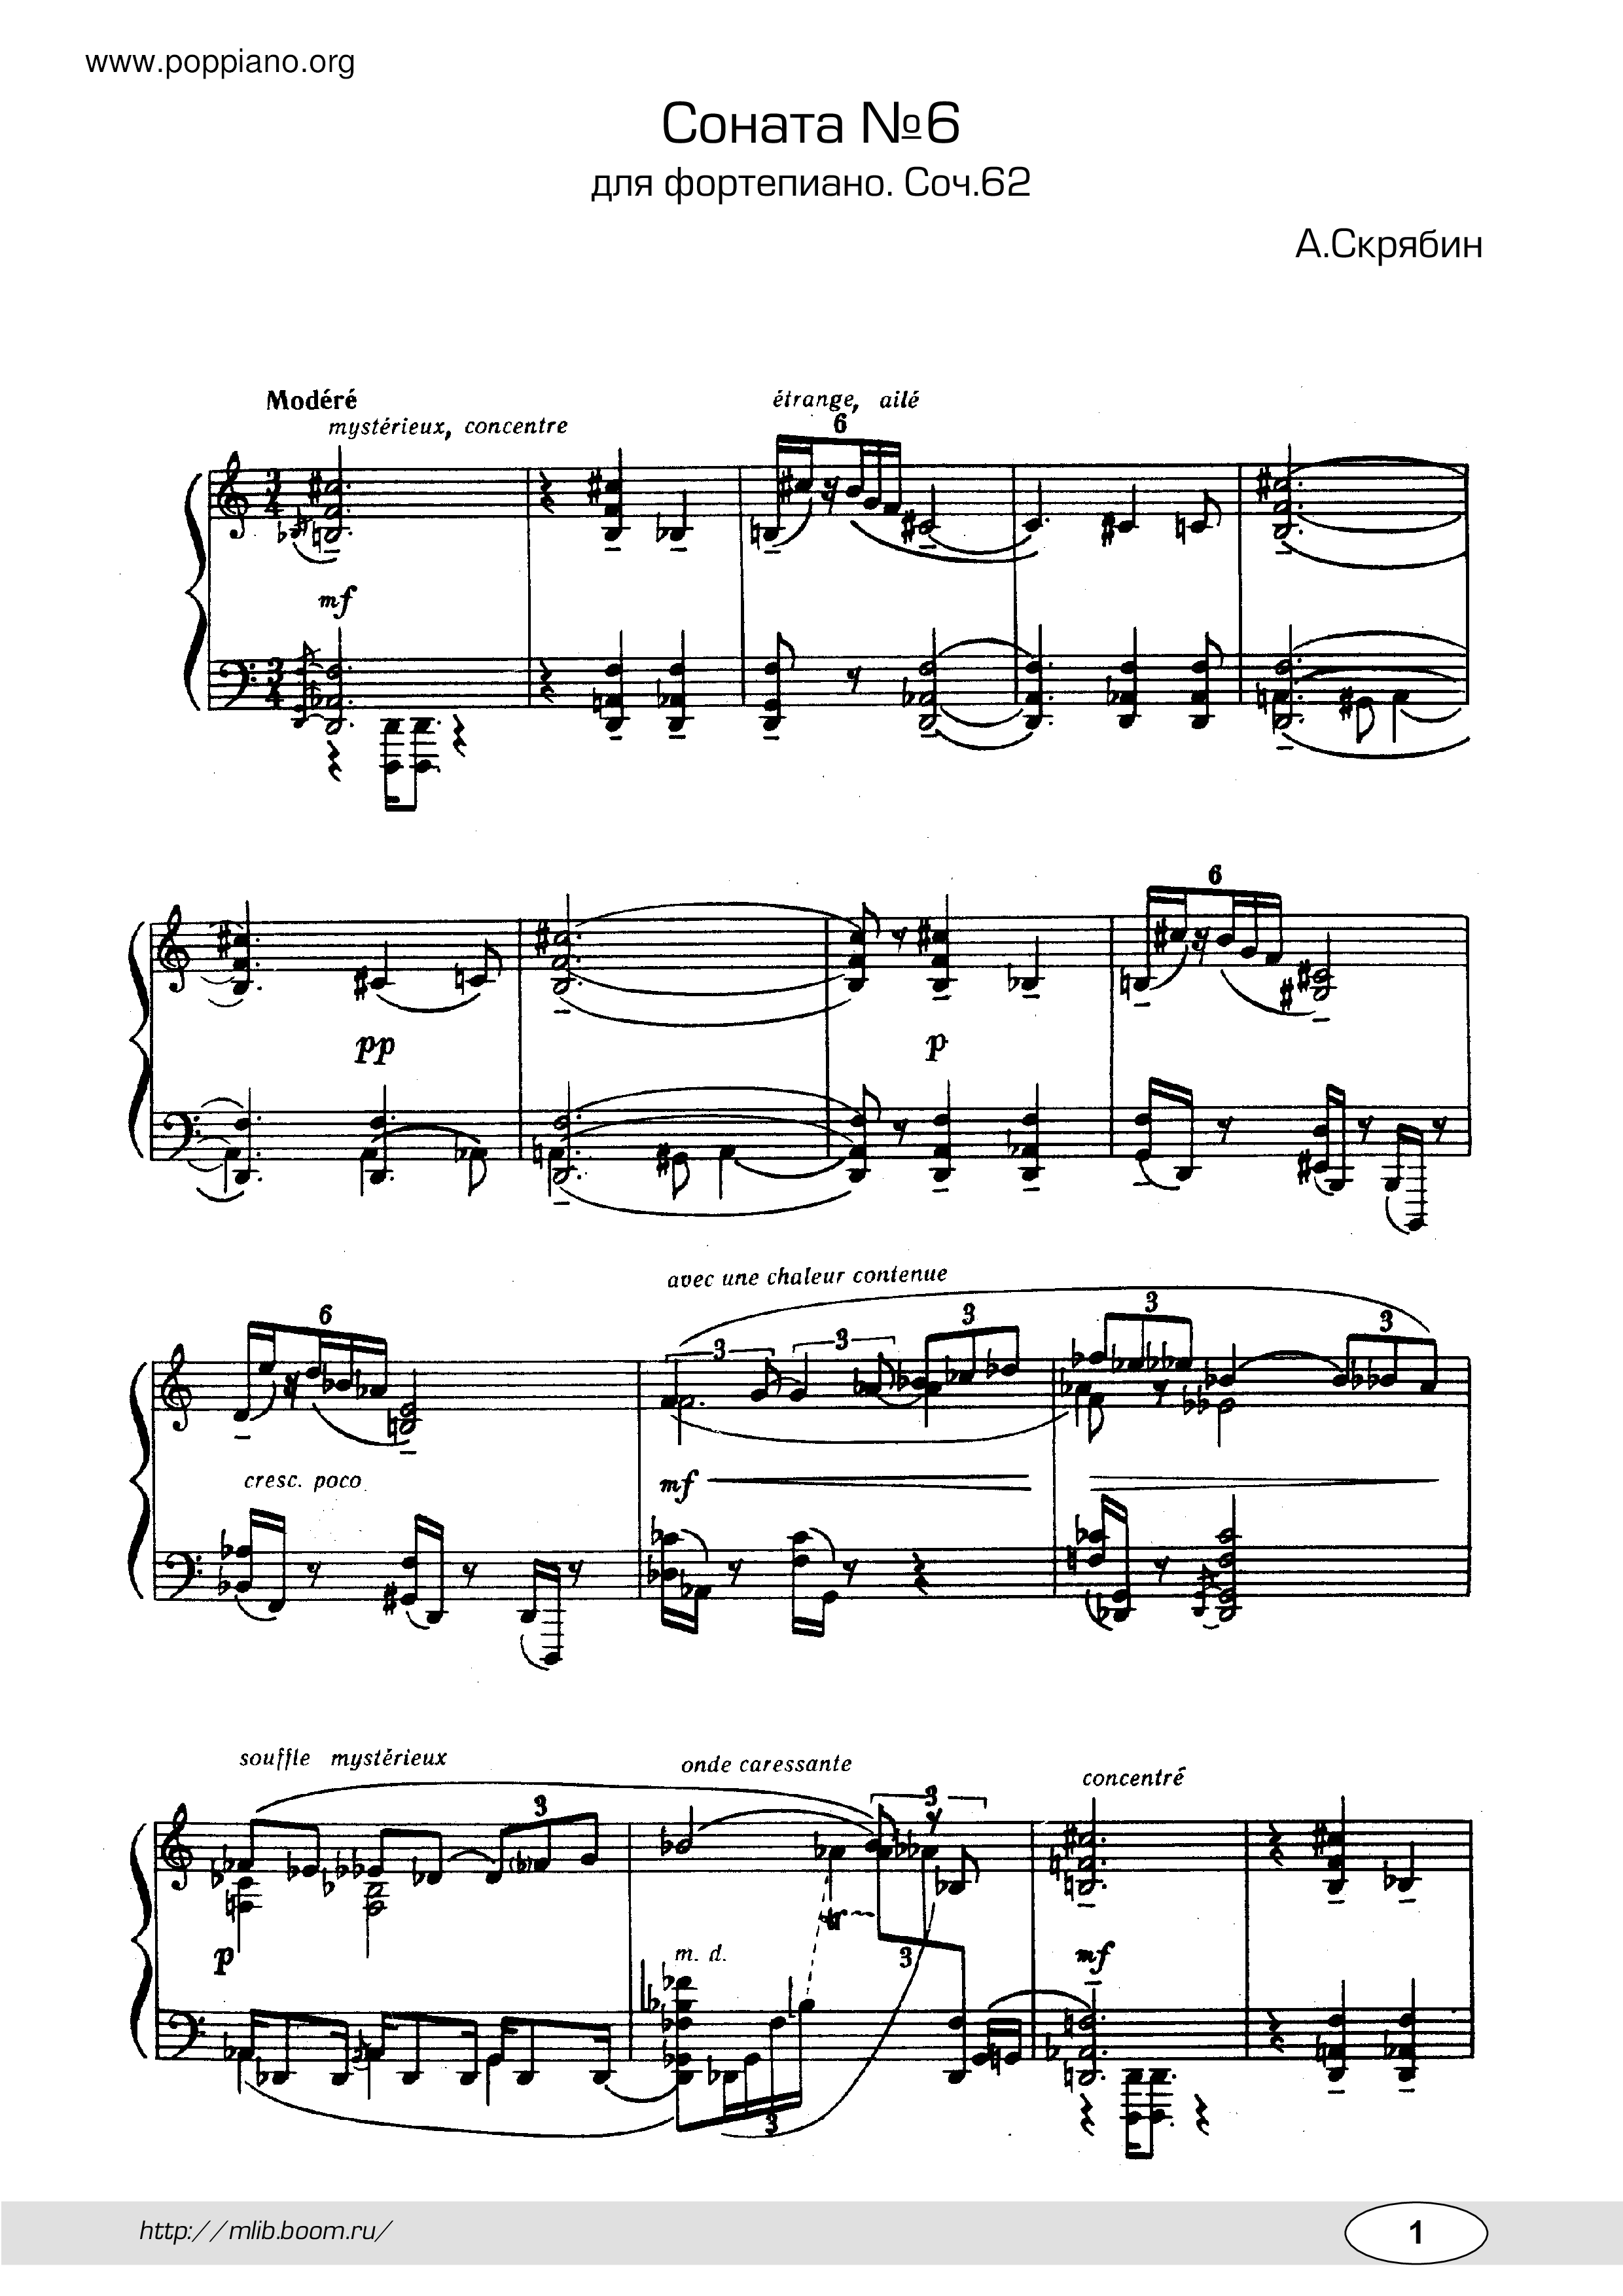 Piano Sonata No.6, Op.62 Score